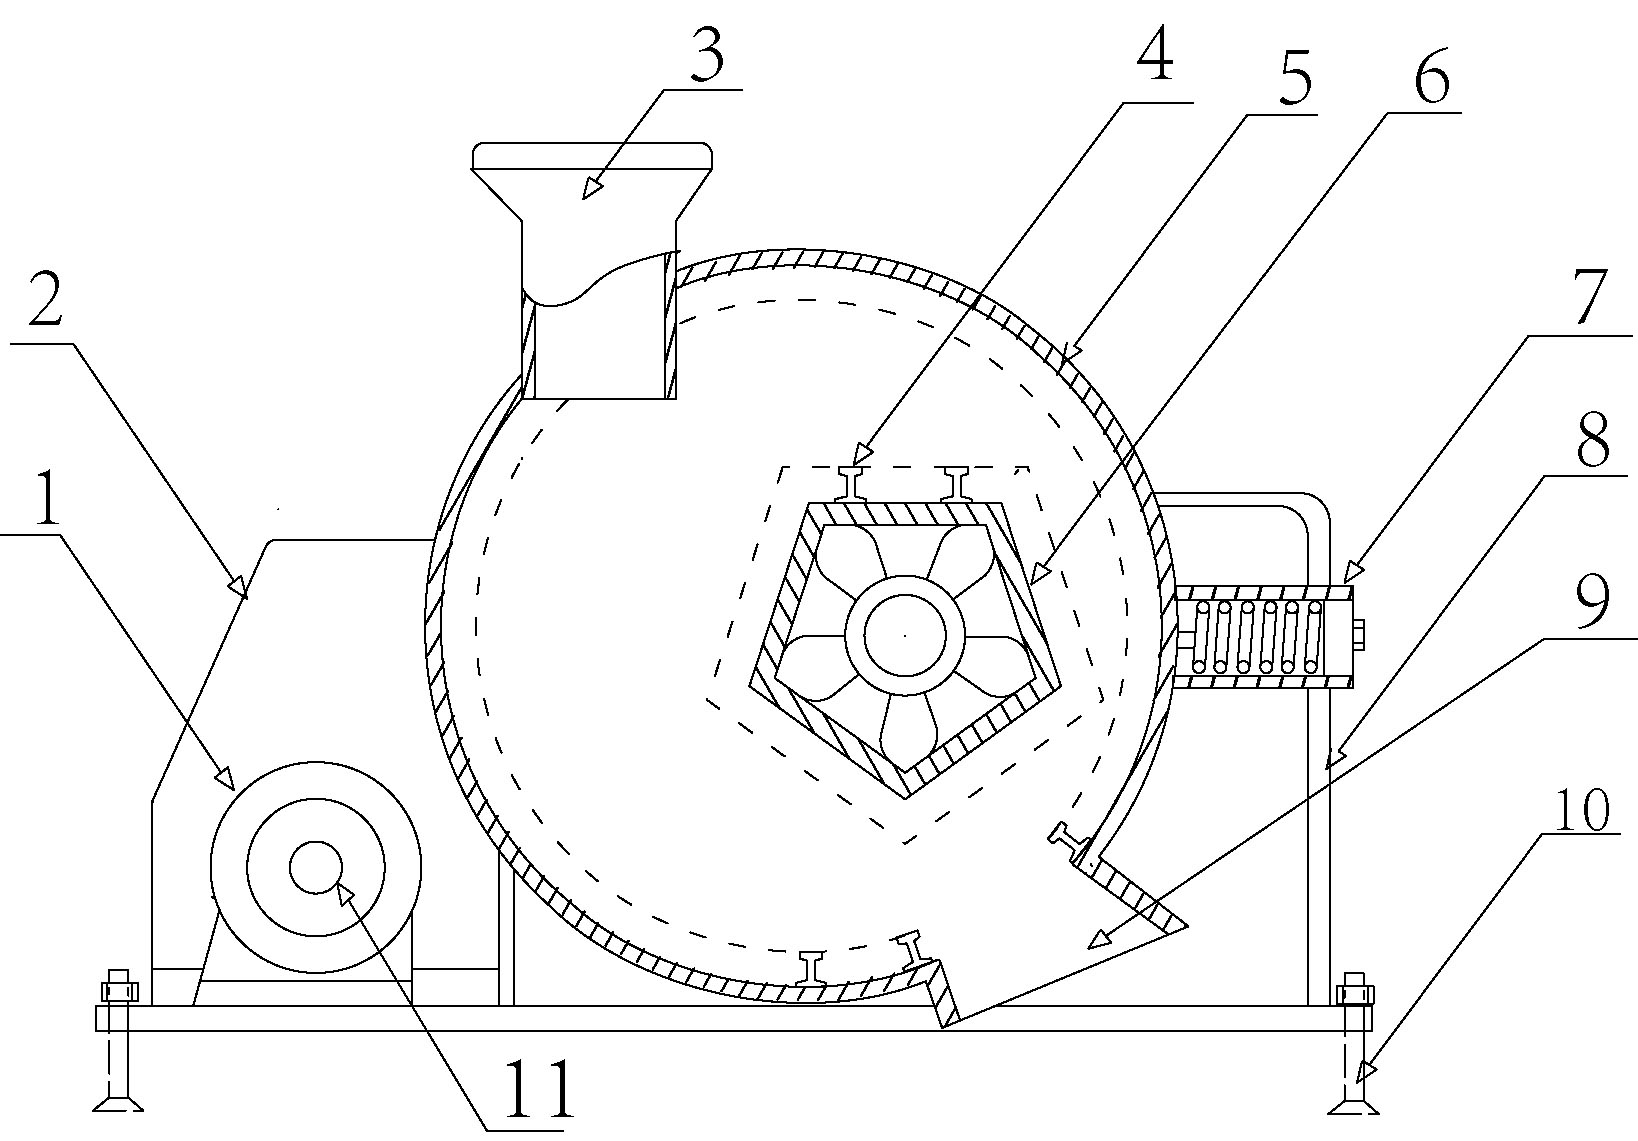 Multi-surface roller type crusher